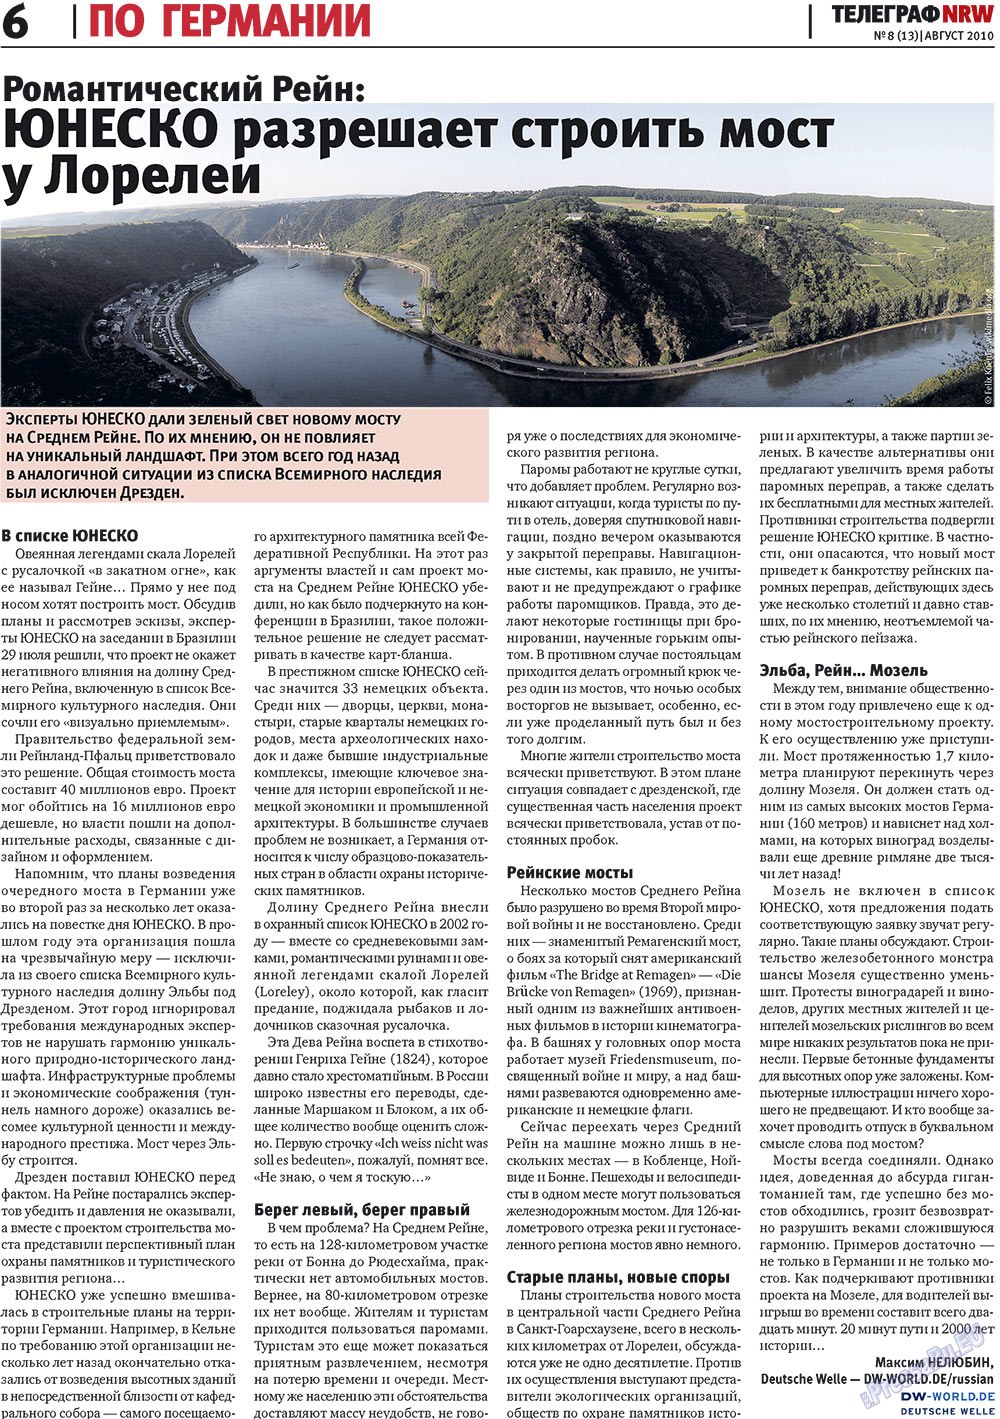 Телеграф NRW, газета. 2010 №8 стр.6